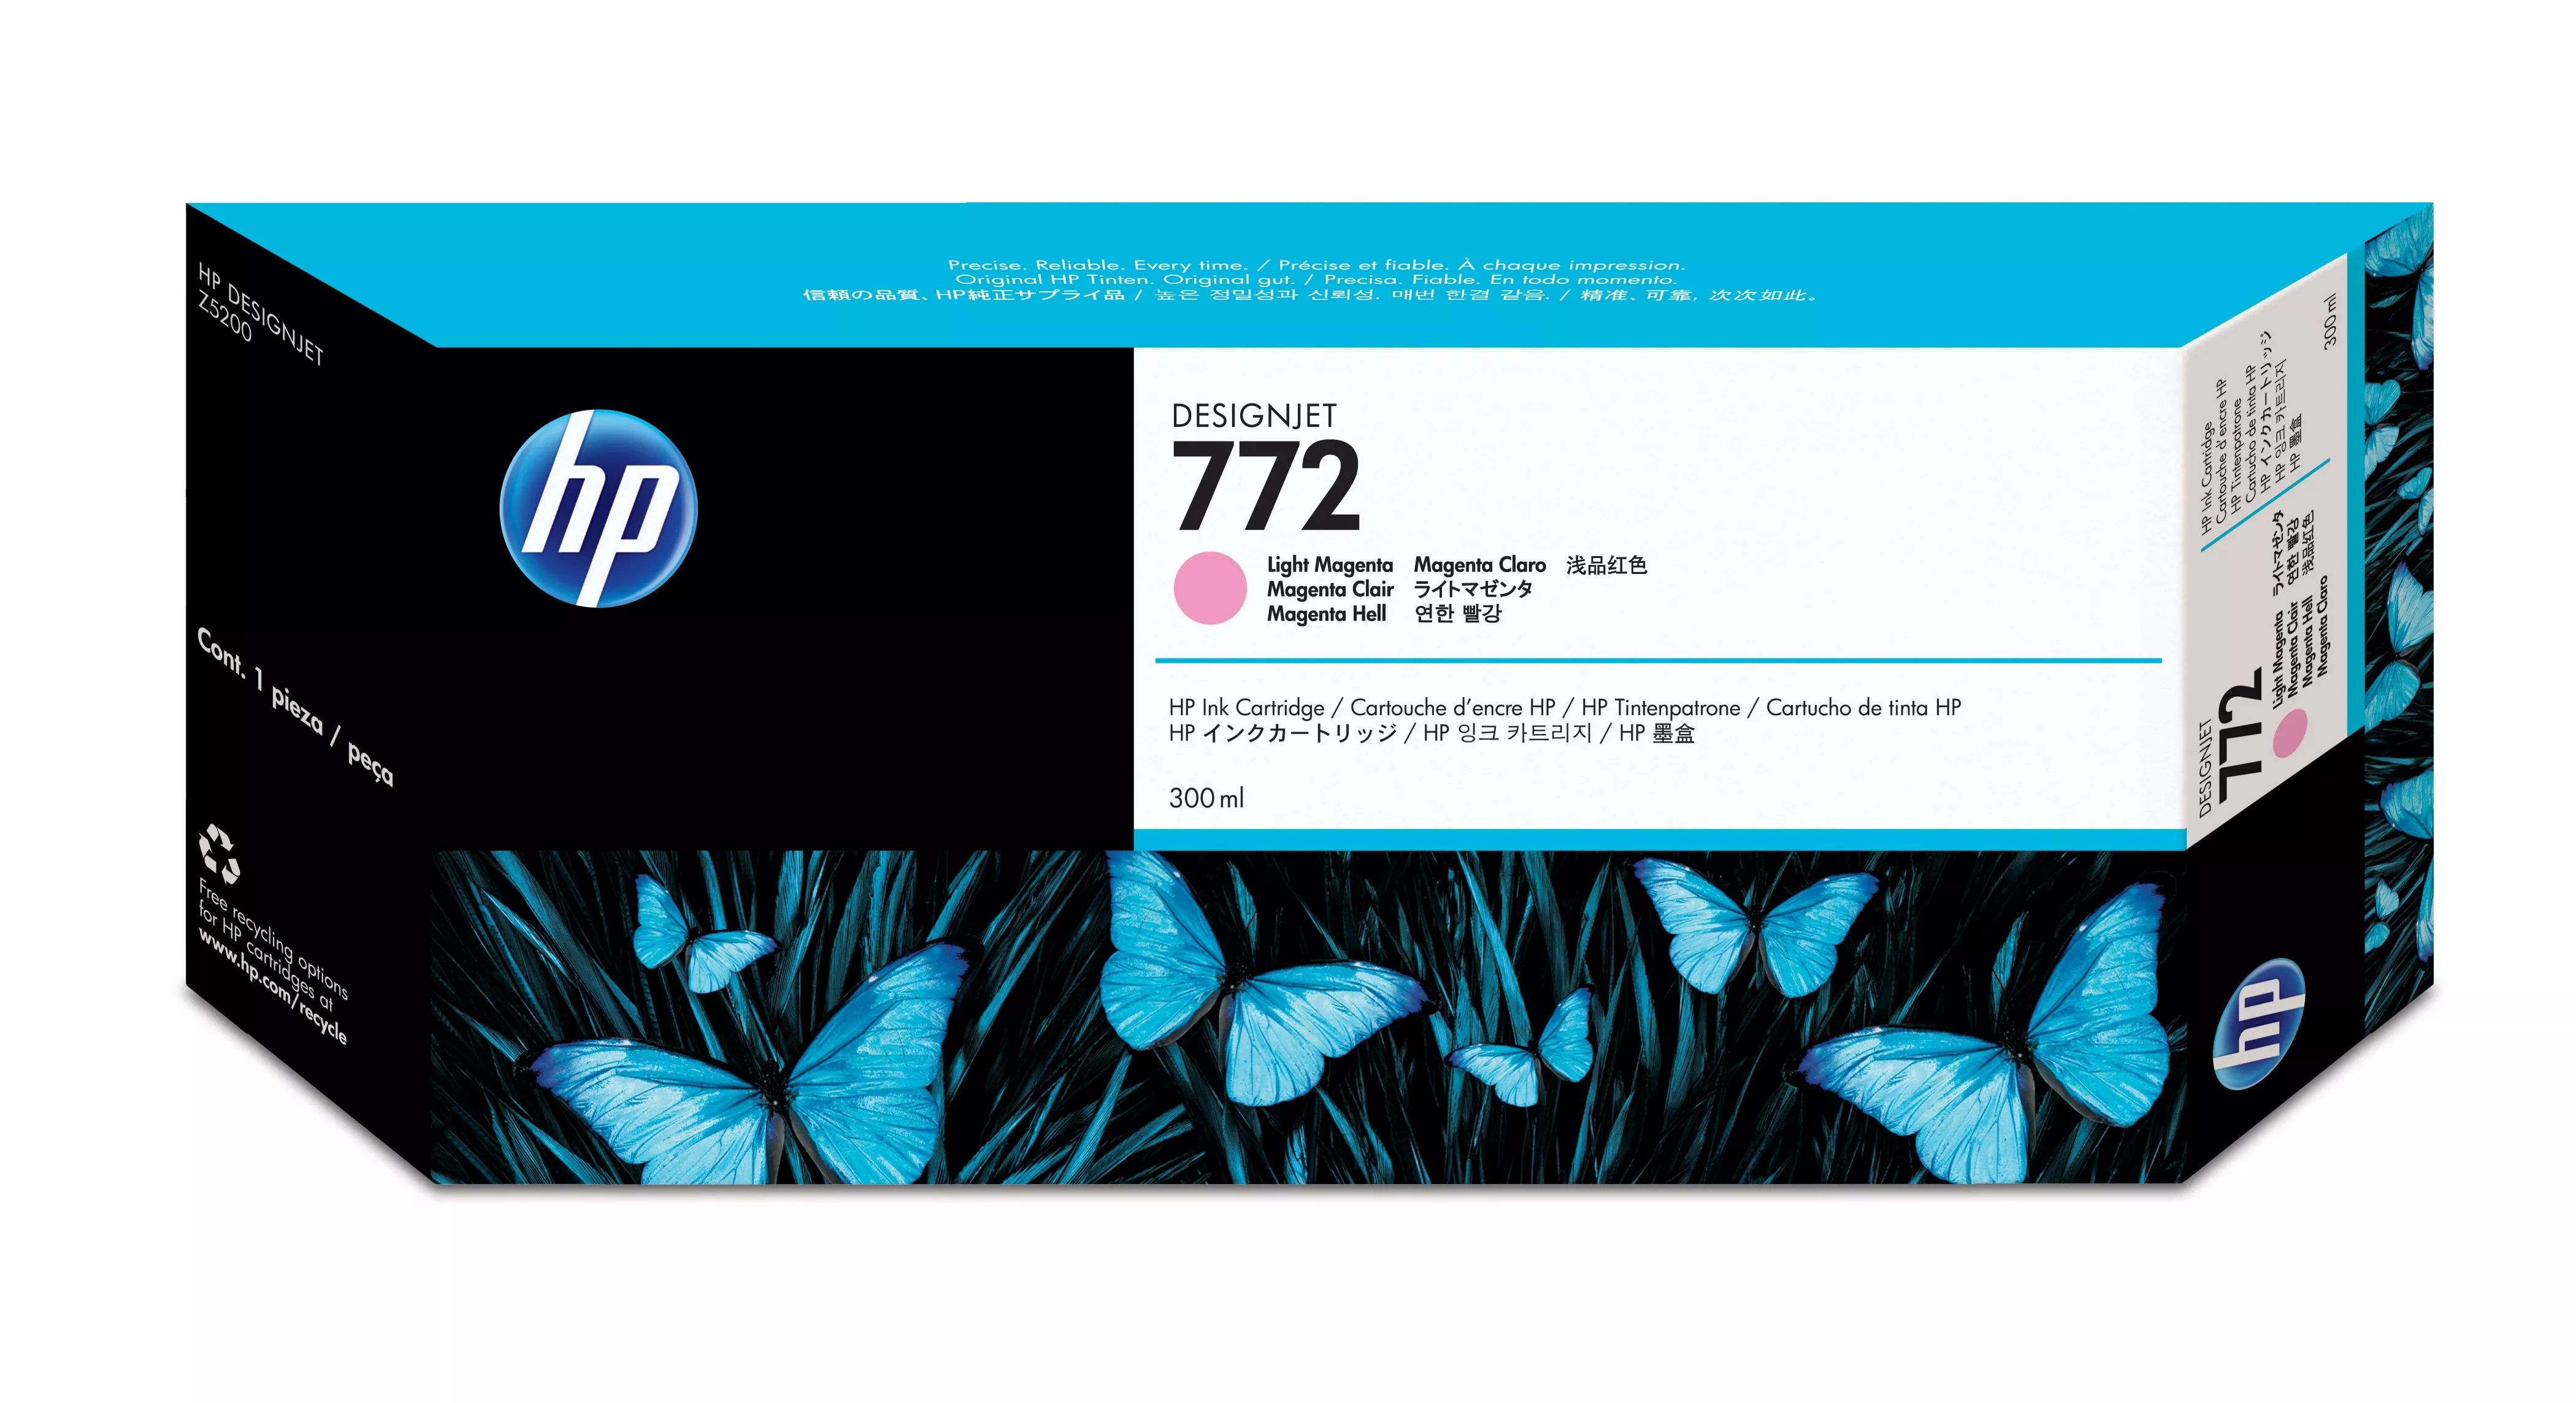 Vente HP 772 original Ink cartridge CN631A light magenta HP au meilleur prix - visuel 2